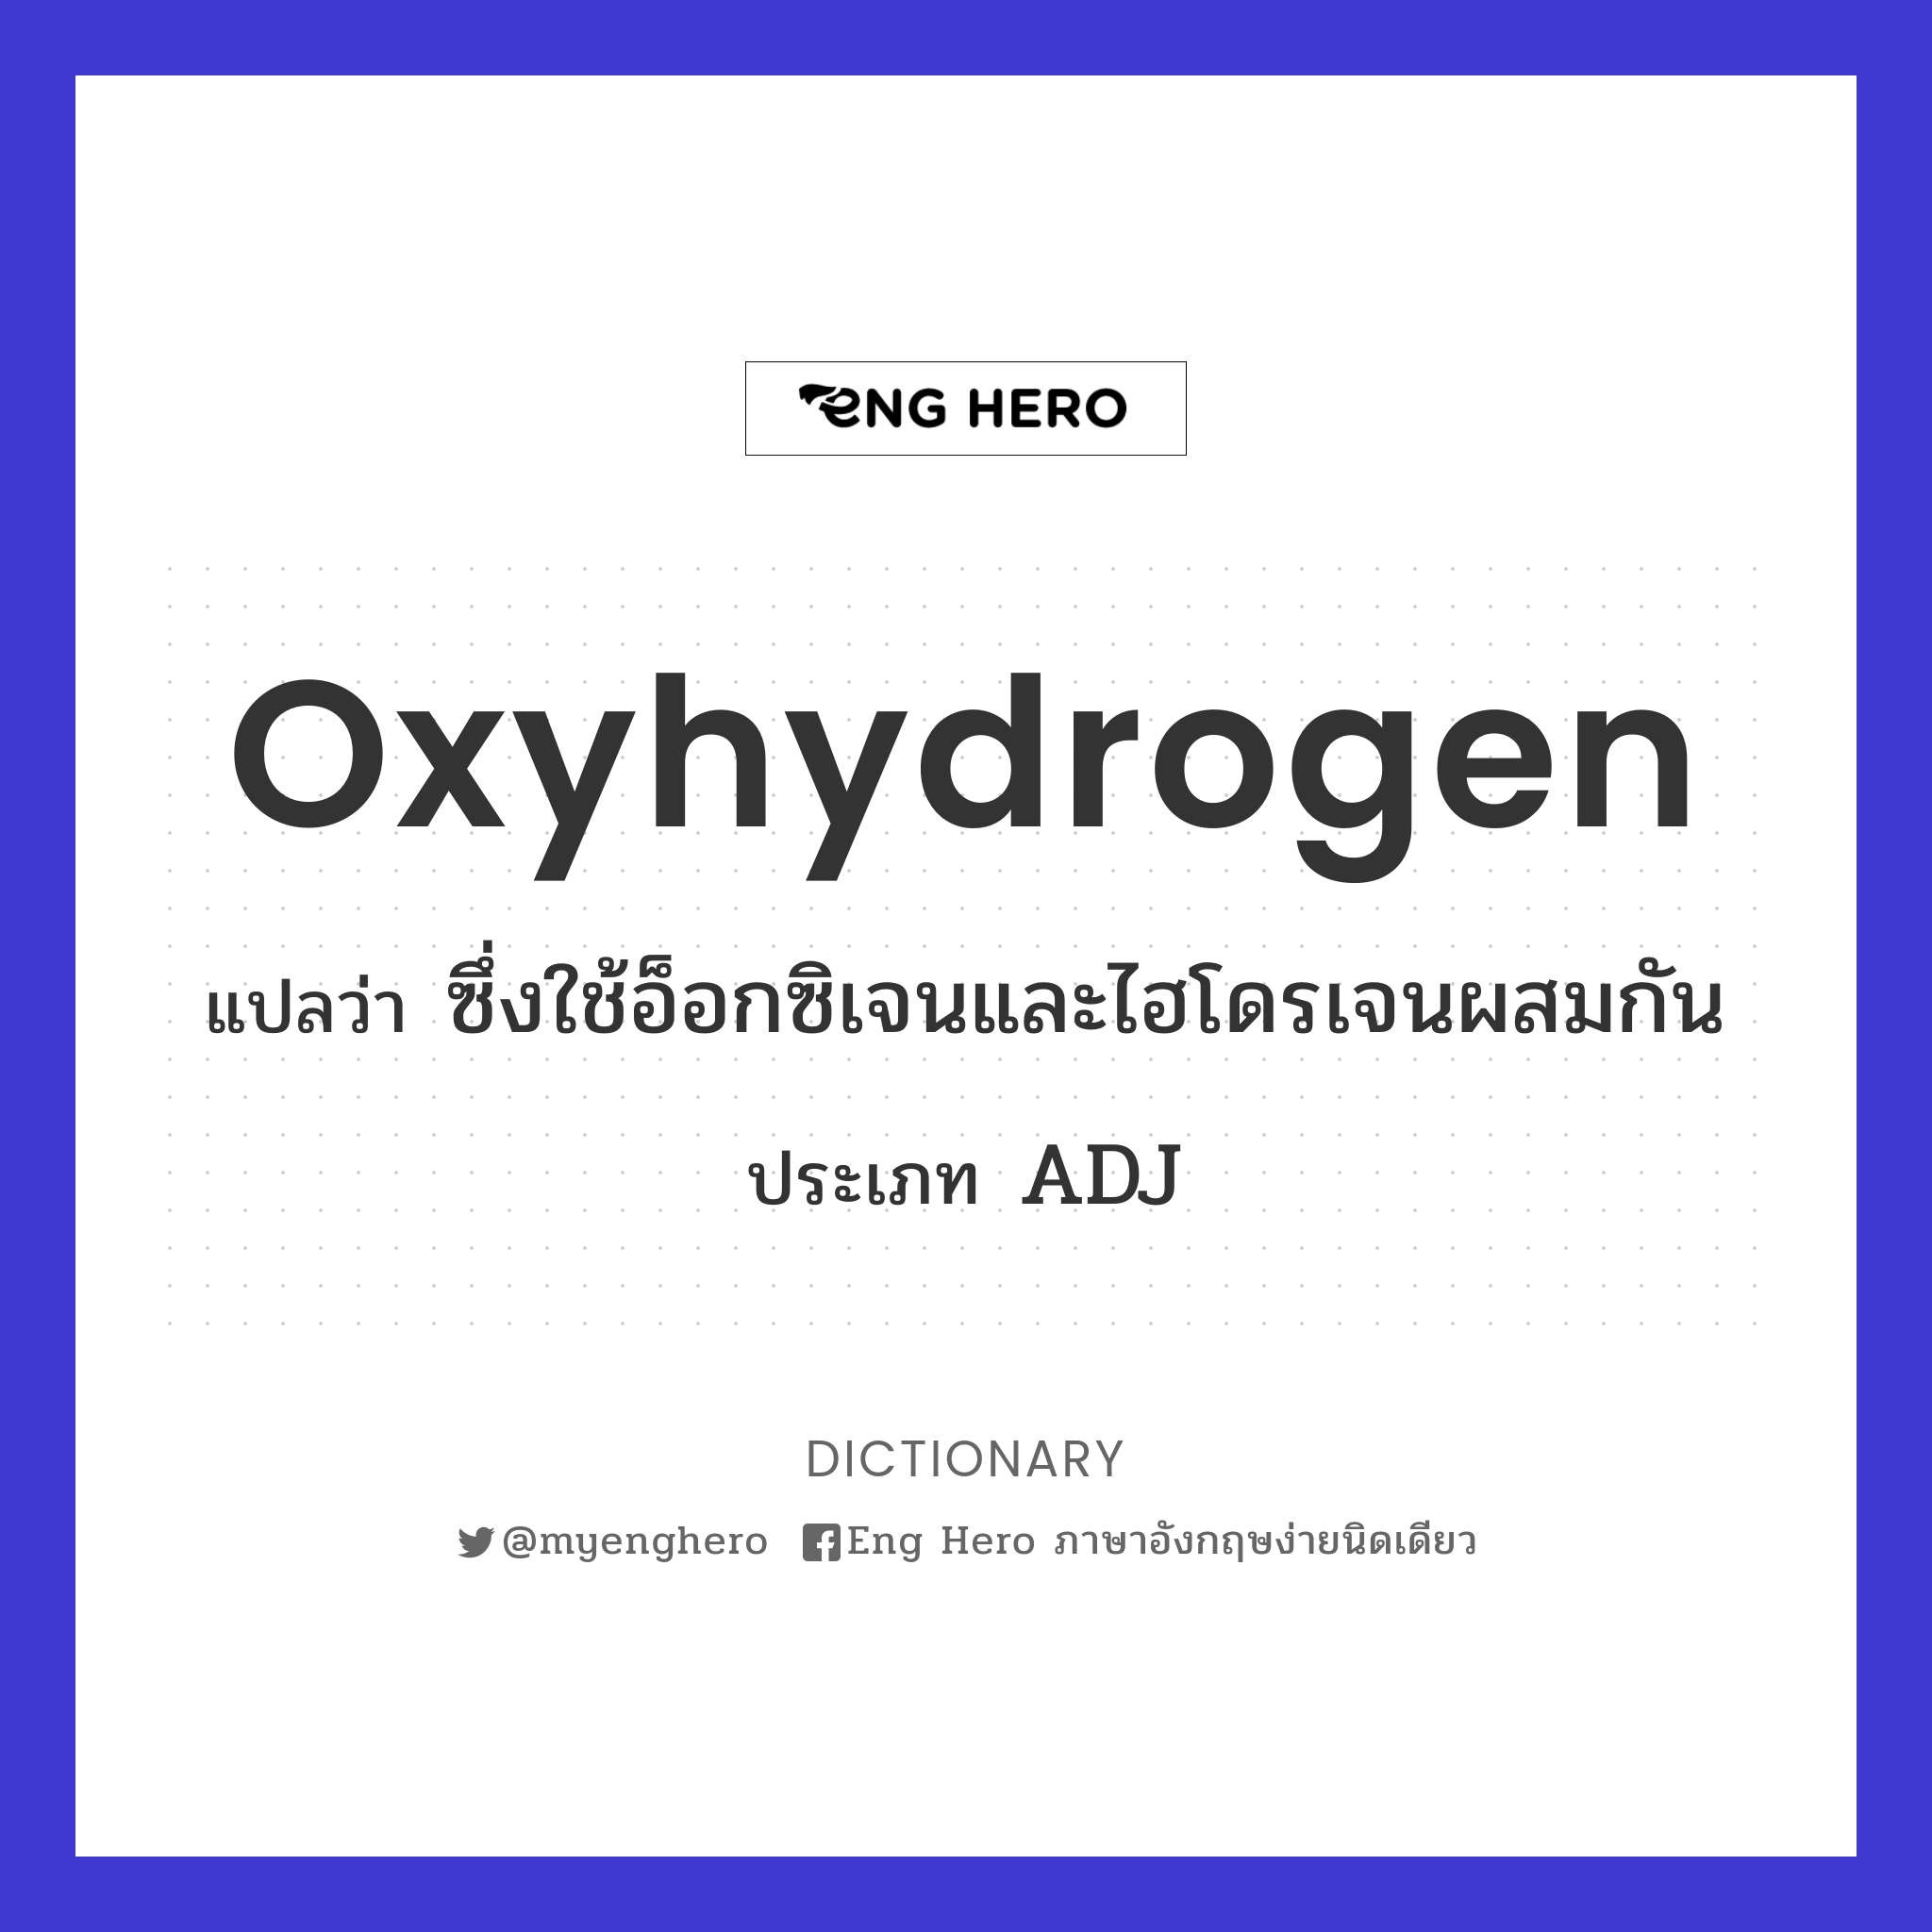 oxyhydrogen